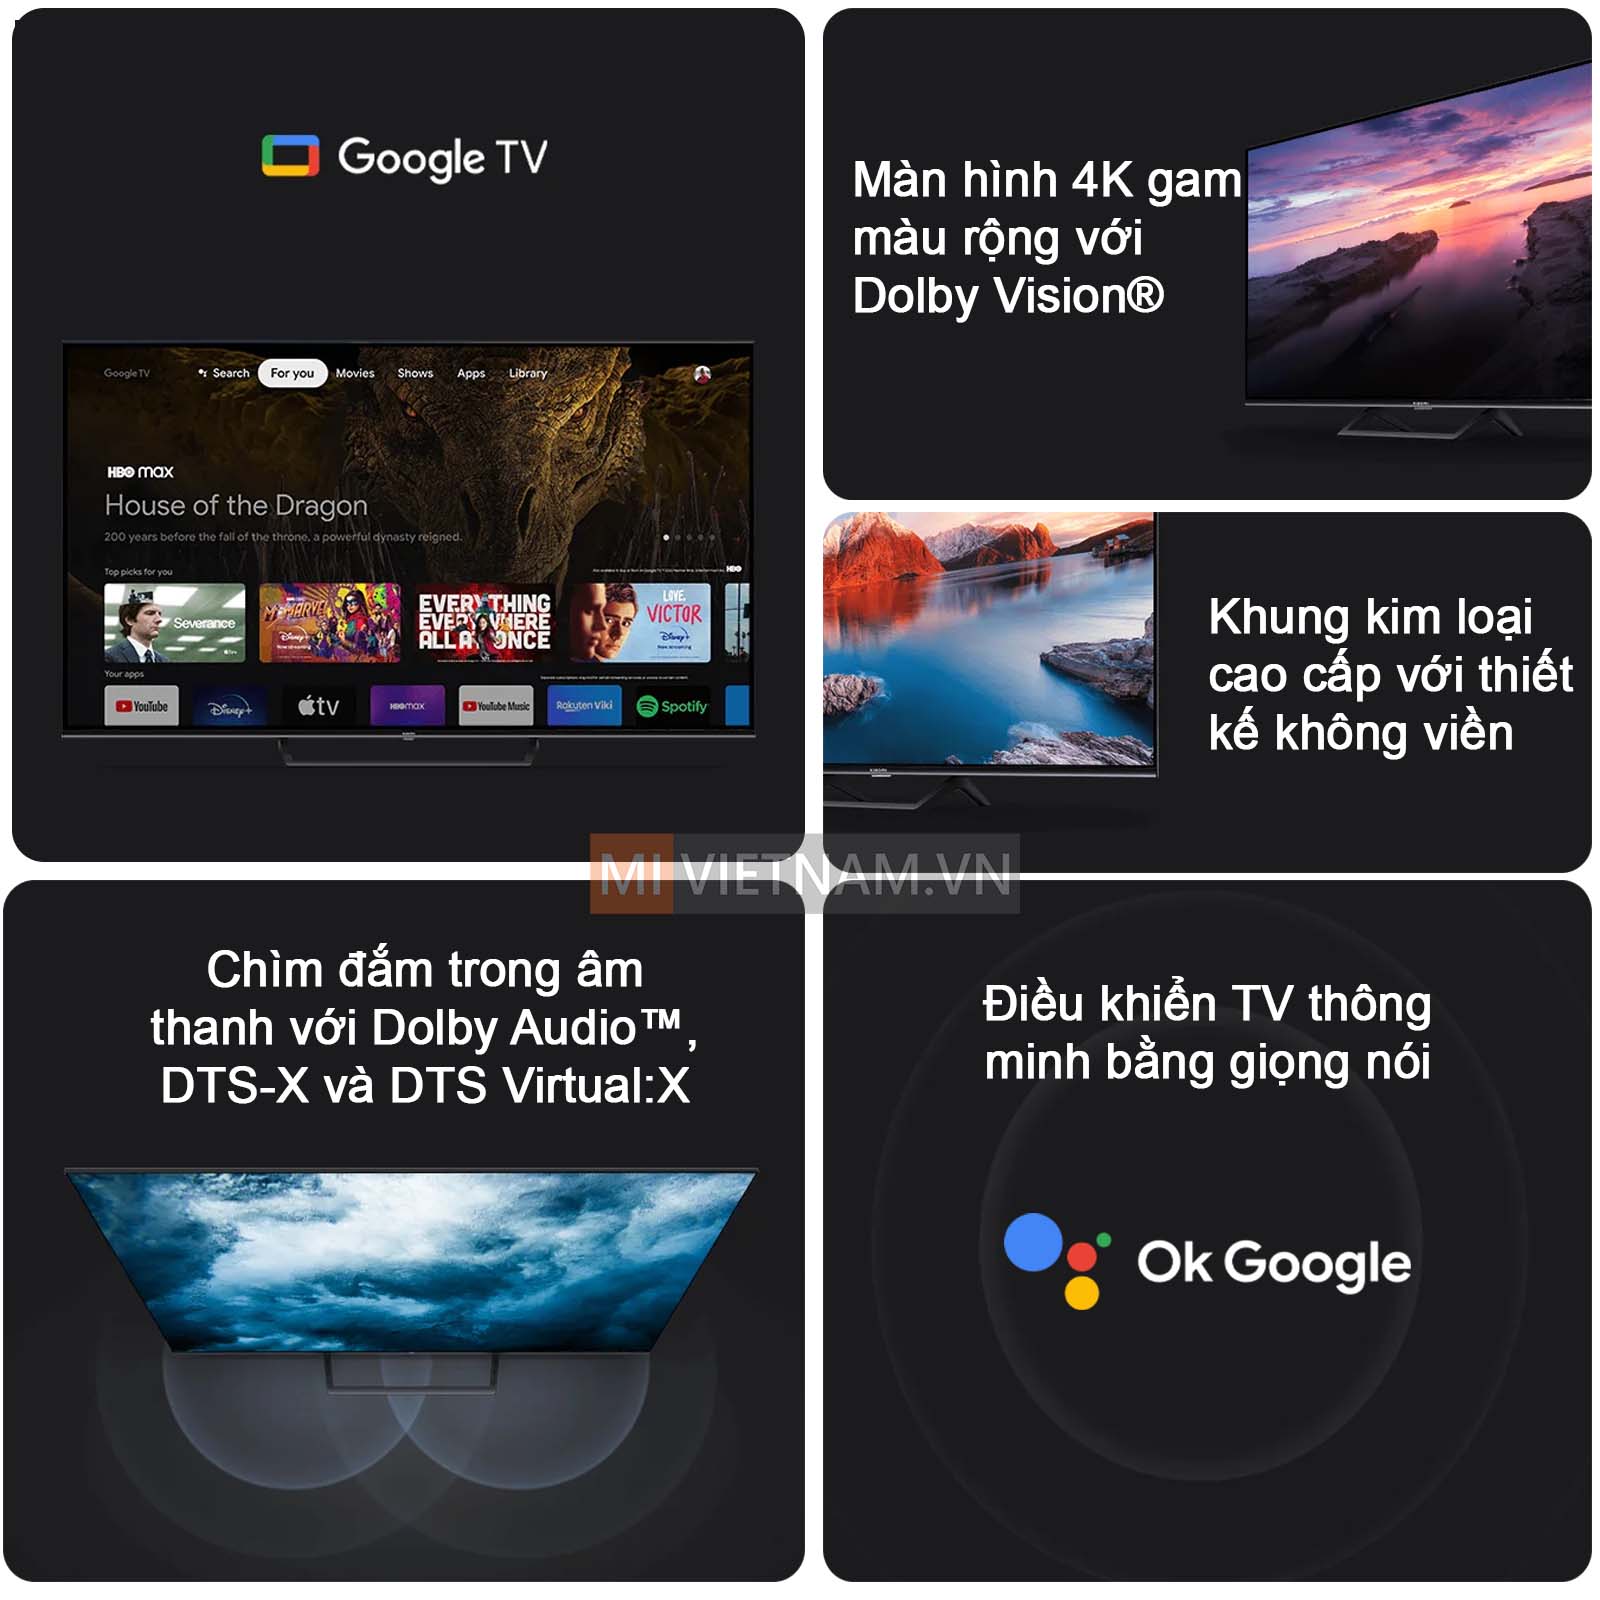 Tivi Xiaomi 65 inch 65A Pro 4K Google TV 